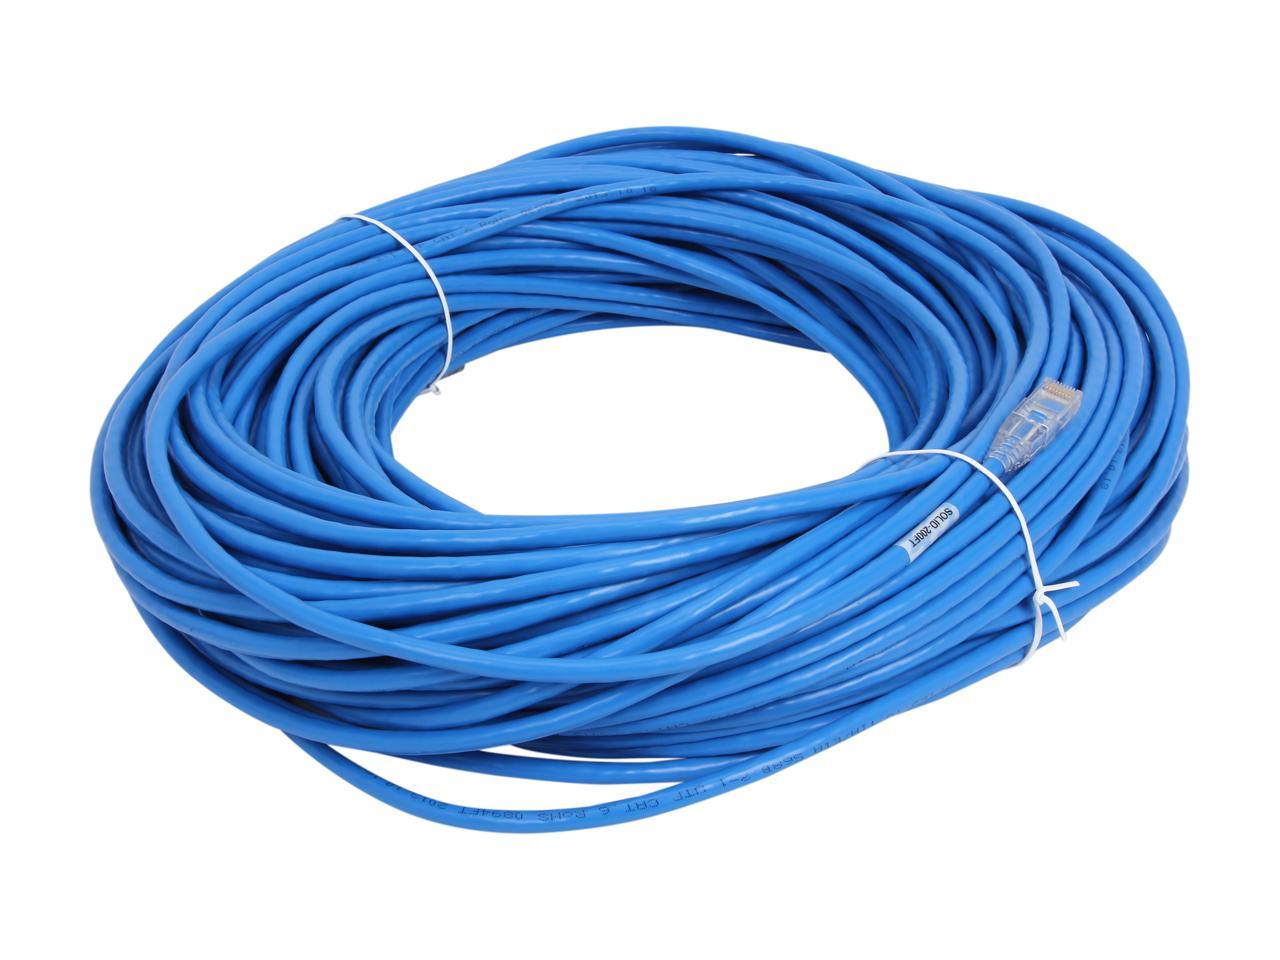 TRIPP LITE N202-200-BL 200 ft. Cat 6 Blue Network Cable